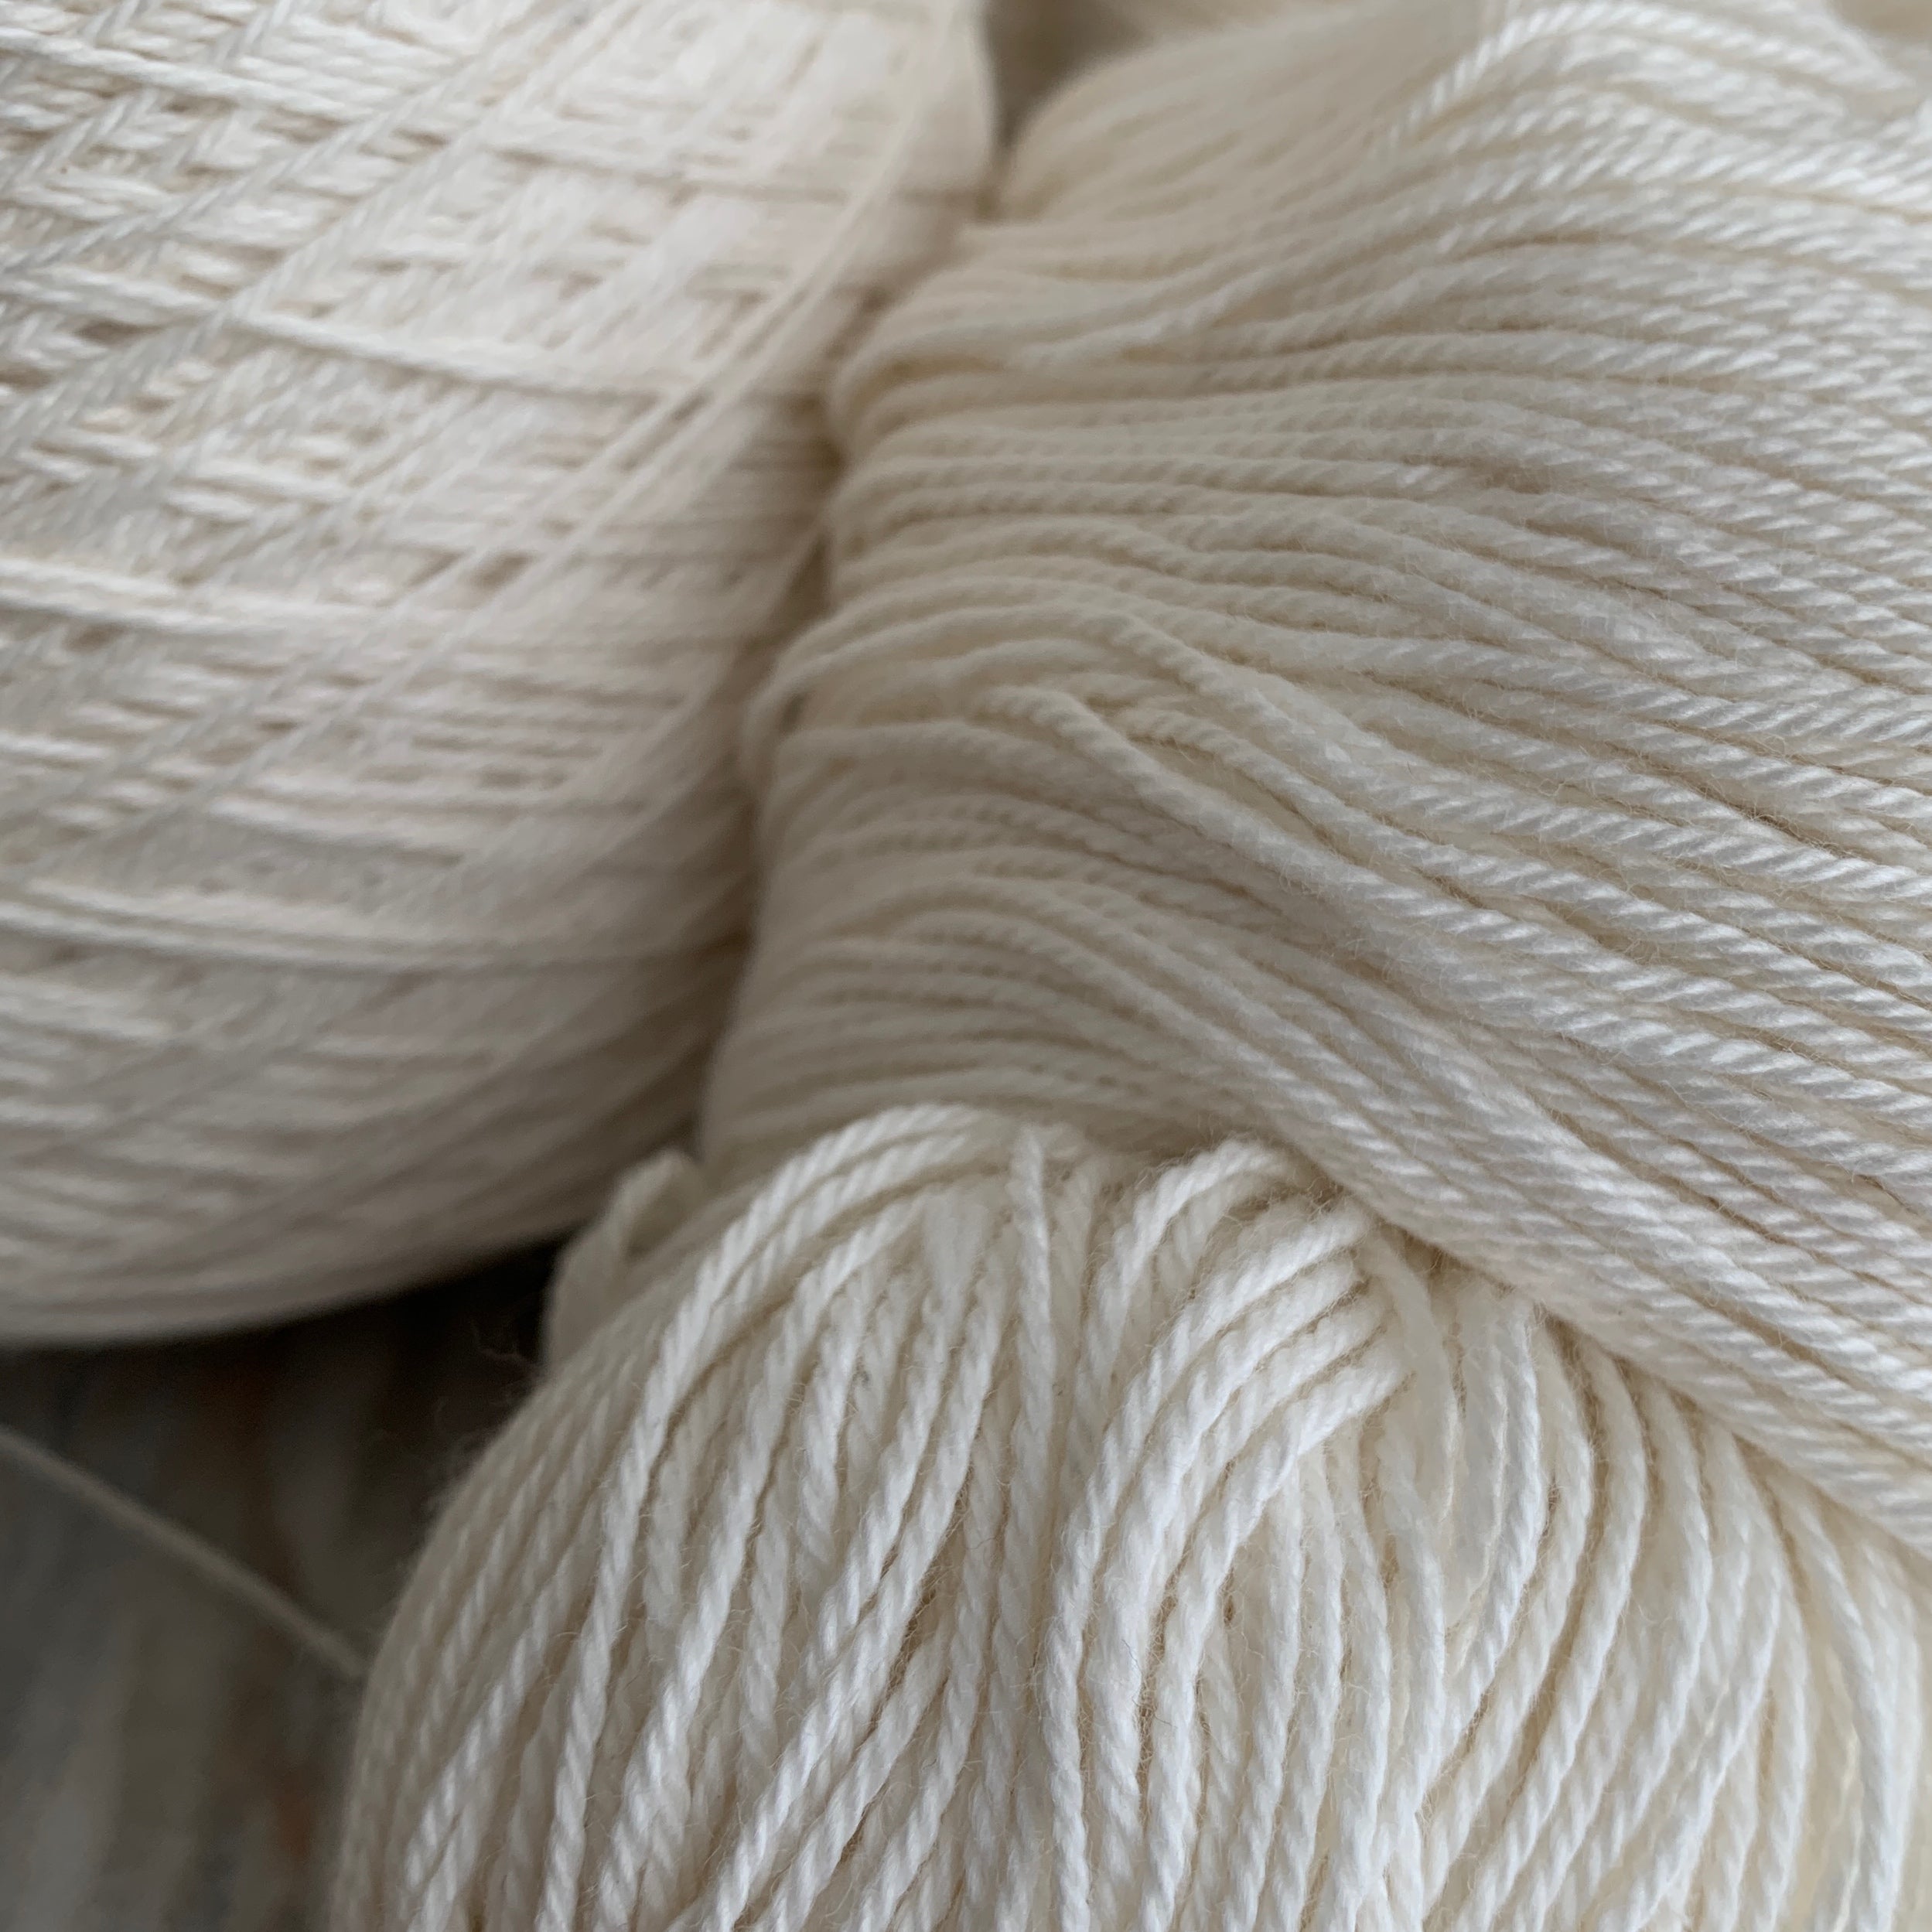 Ivory - Merino Alpaca and Silk Blend - 100g - GATHER Textiles Inc.